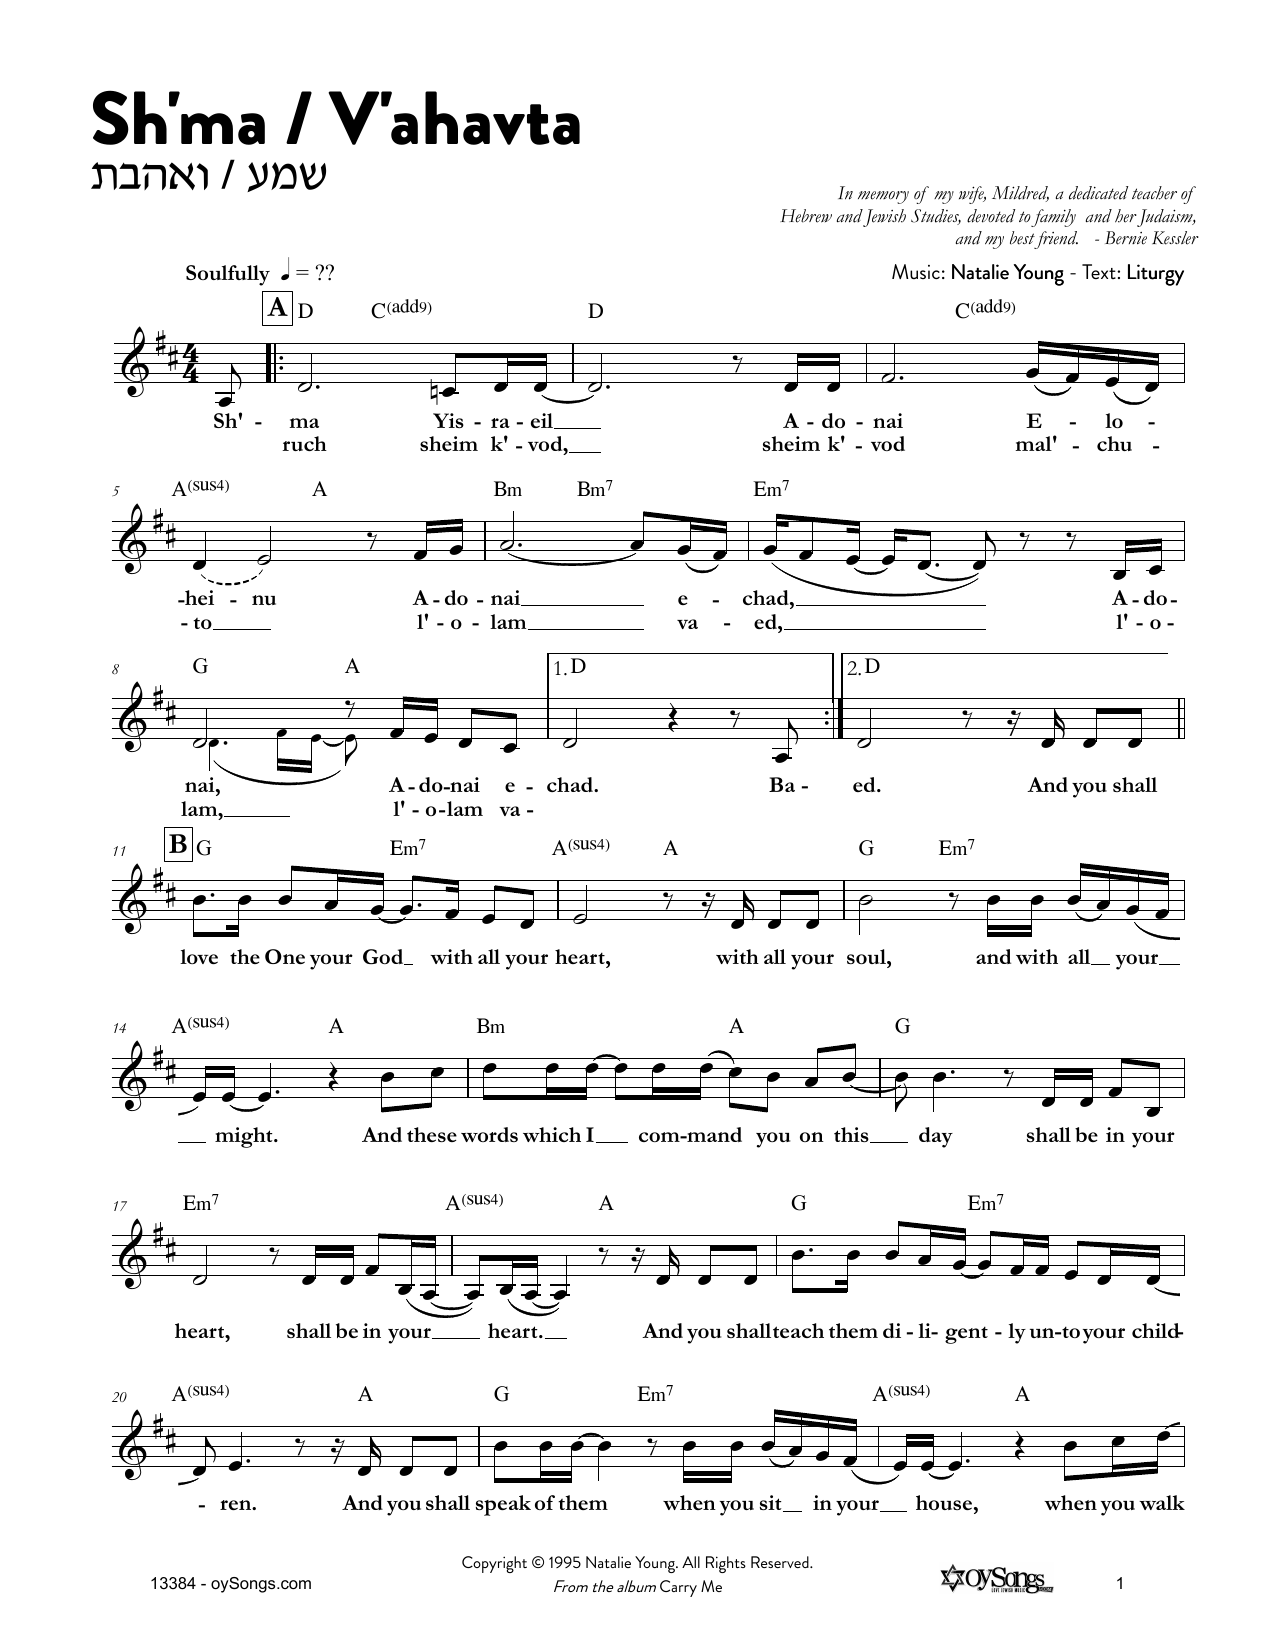 Natalie Young Sh'ma - V'ahavta Sheet Music Notes & Chords for Melody Line, Lyrics & Chords - Download or Print PDF